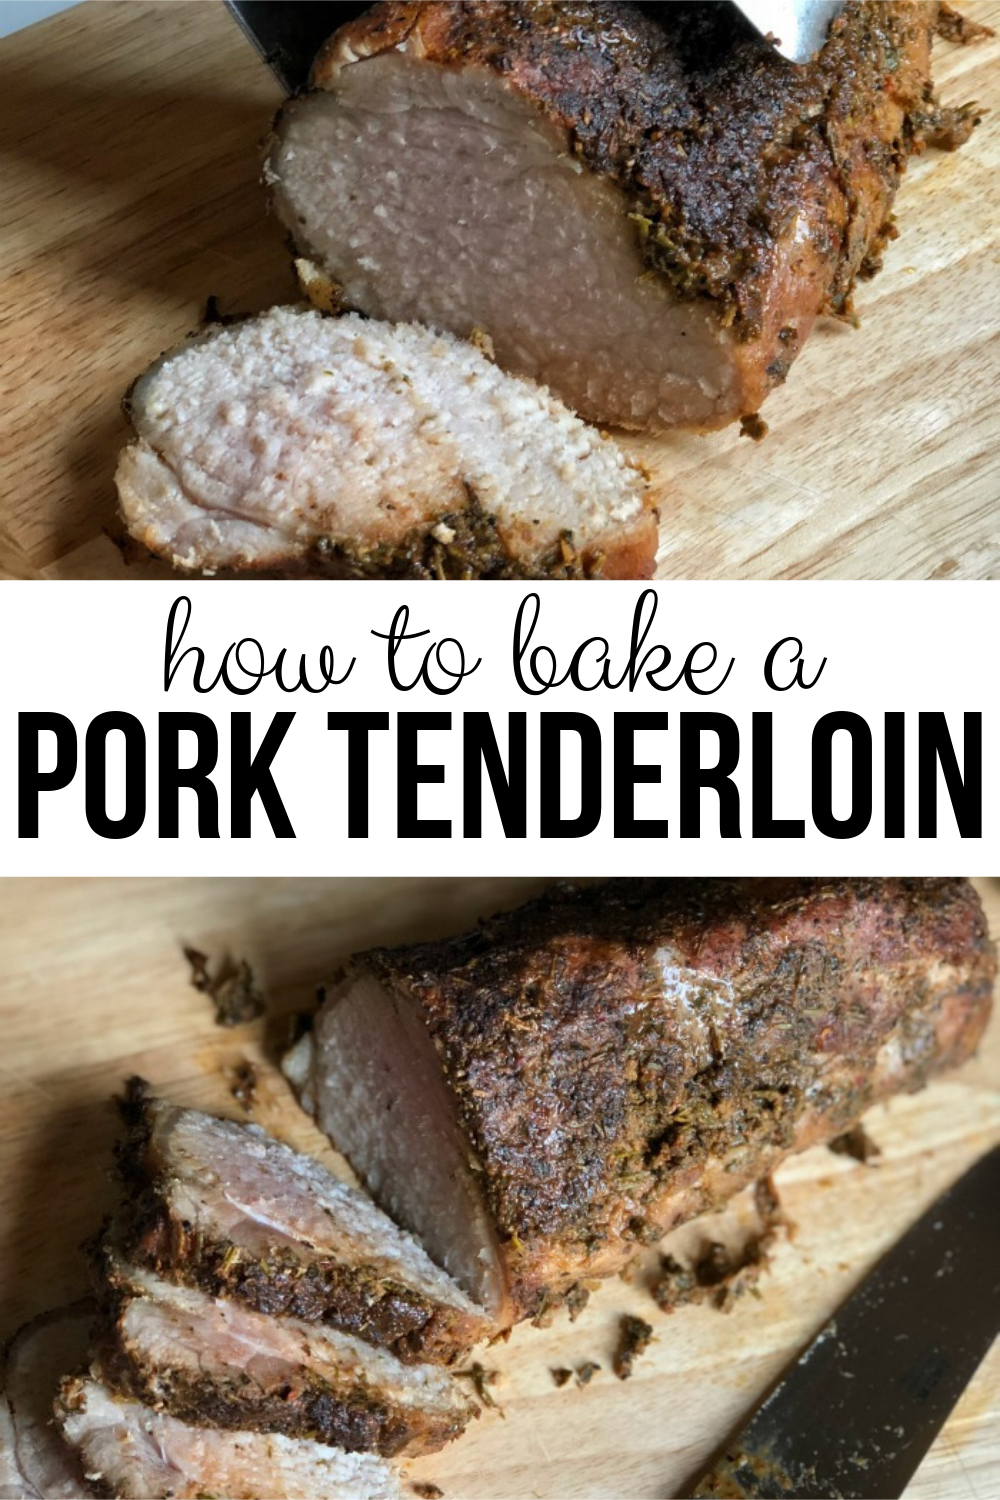 How Long To Cook 5 Lb Pork Tenderloin In Oven At 375